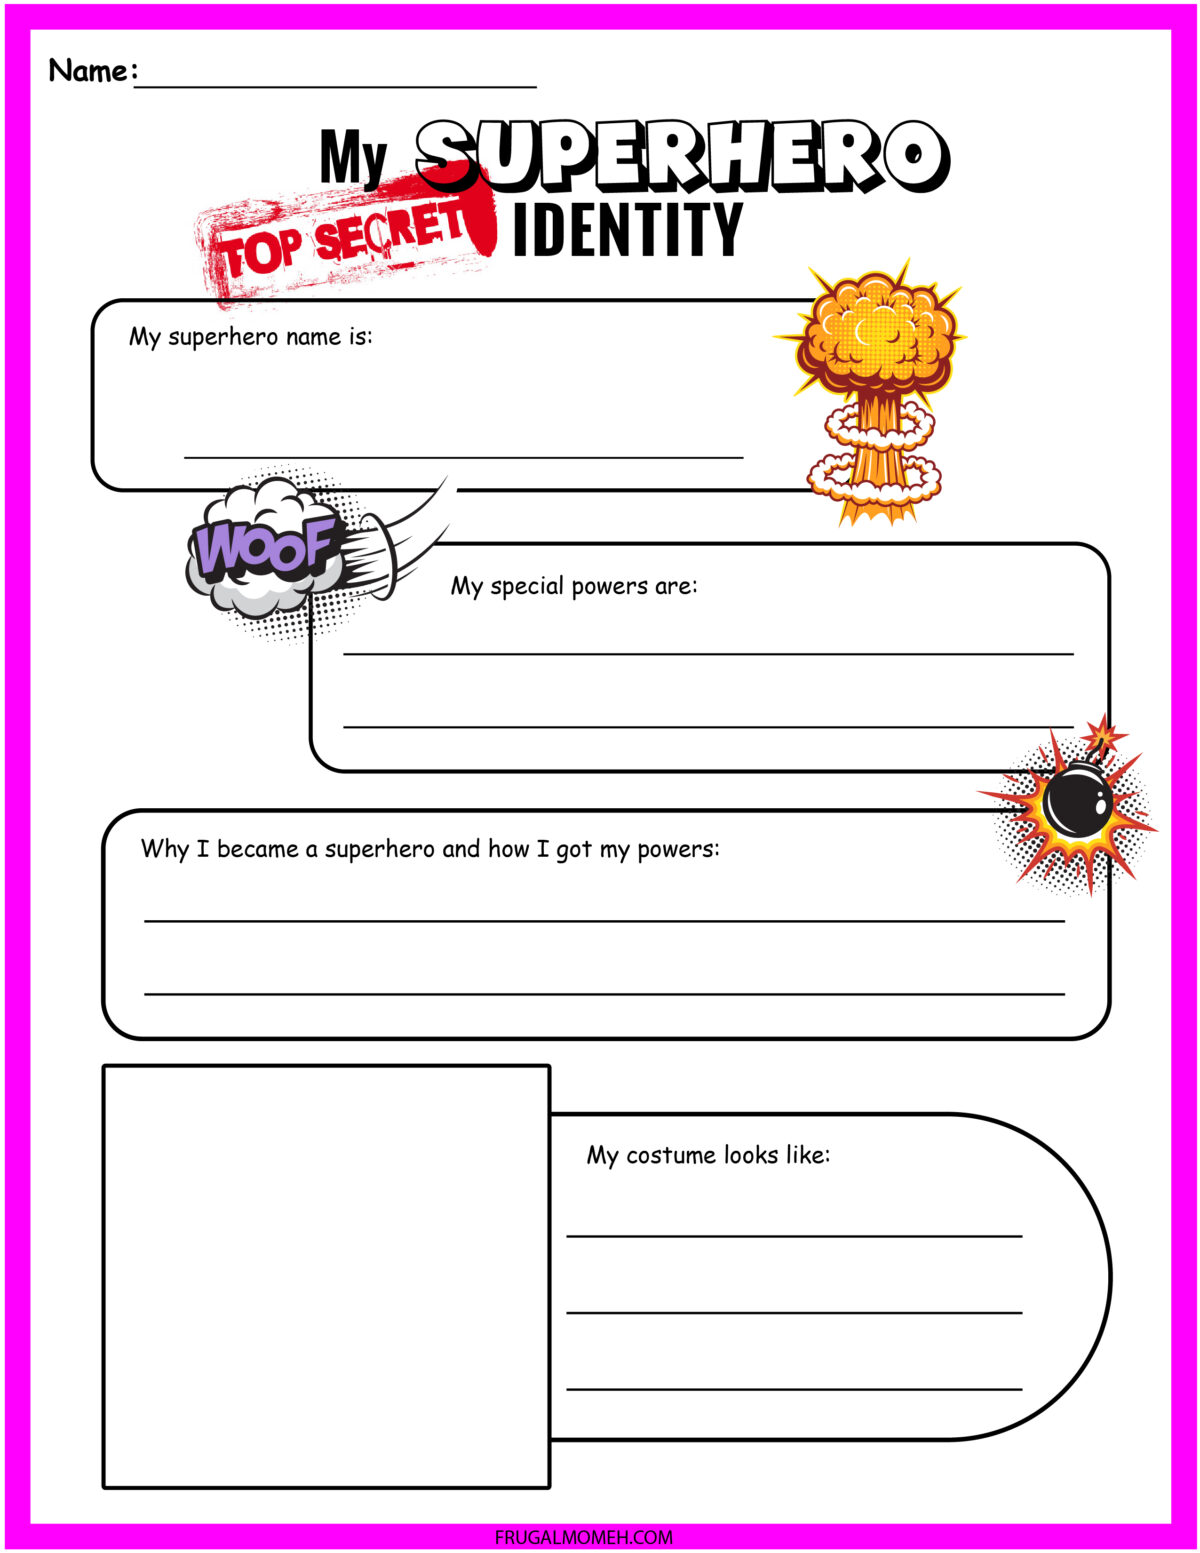 The Superhero identity writing prompt worksheet